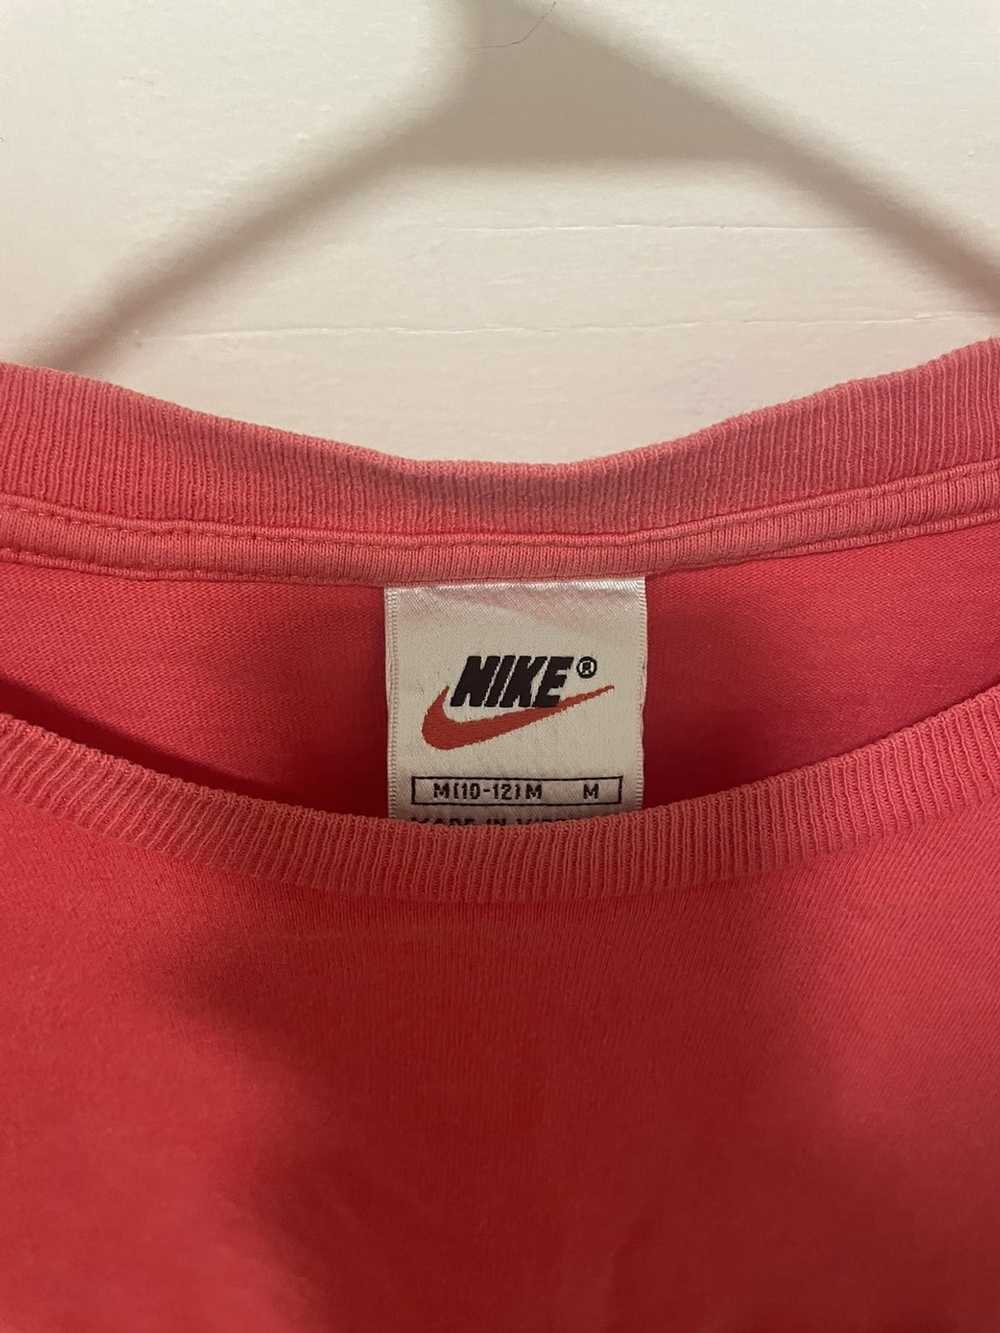 Nike VINTAGE RED NIKE POCKET T-SHIRT - image 3